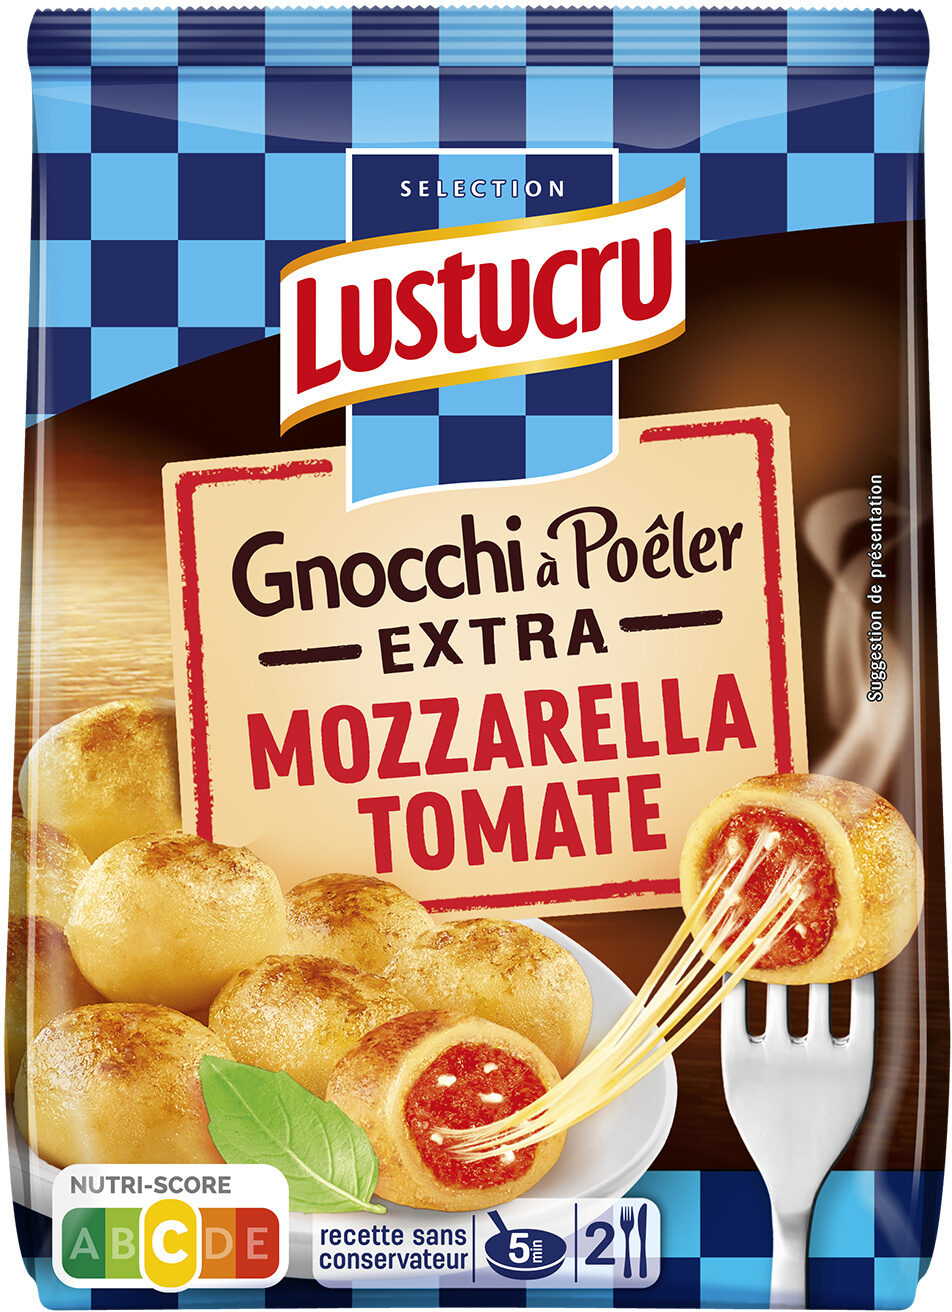 Gnocchi a poeler extra mozzarella tomate 280g - Produit